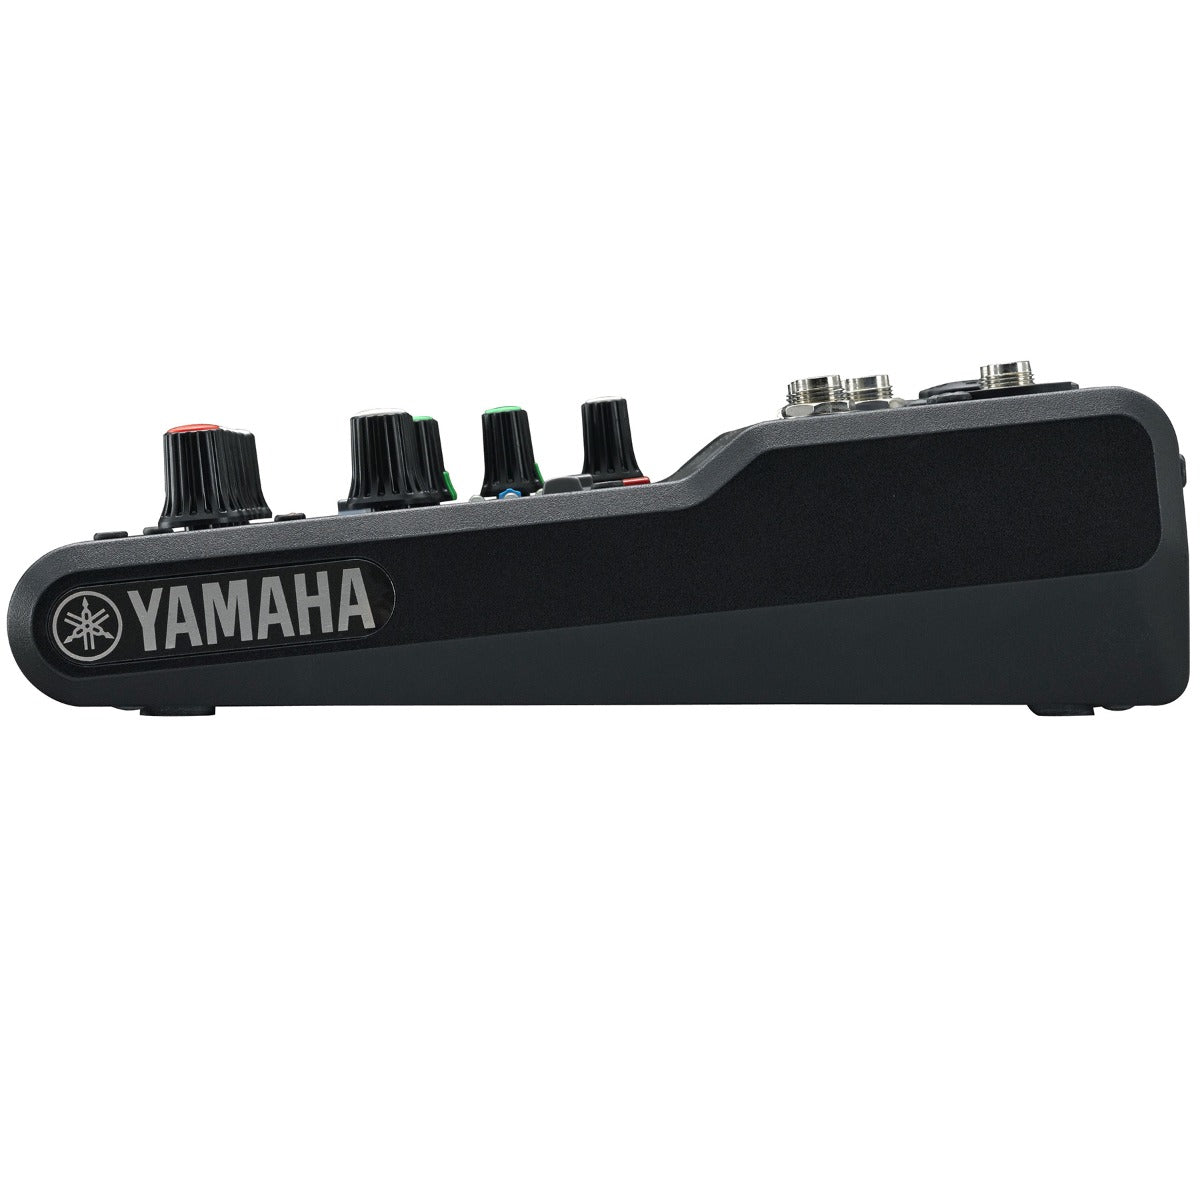 Yamaha MG06X 6-Channel Compact Stereo Mixer CABLE KIT